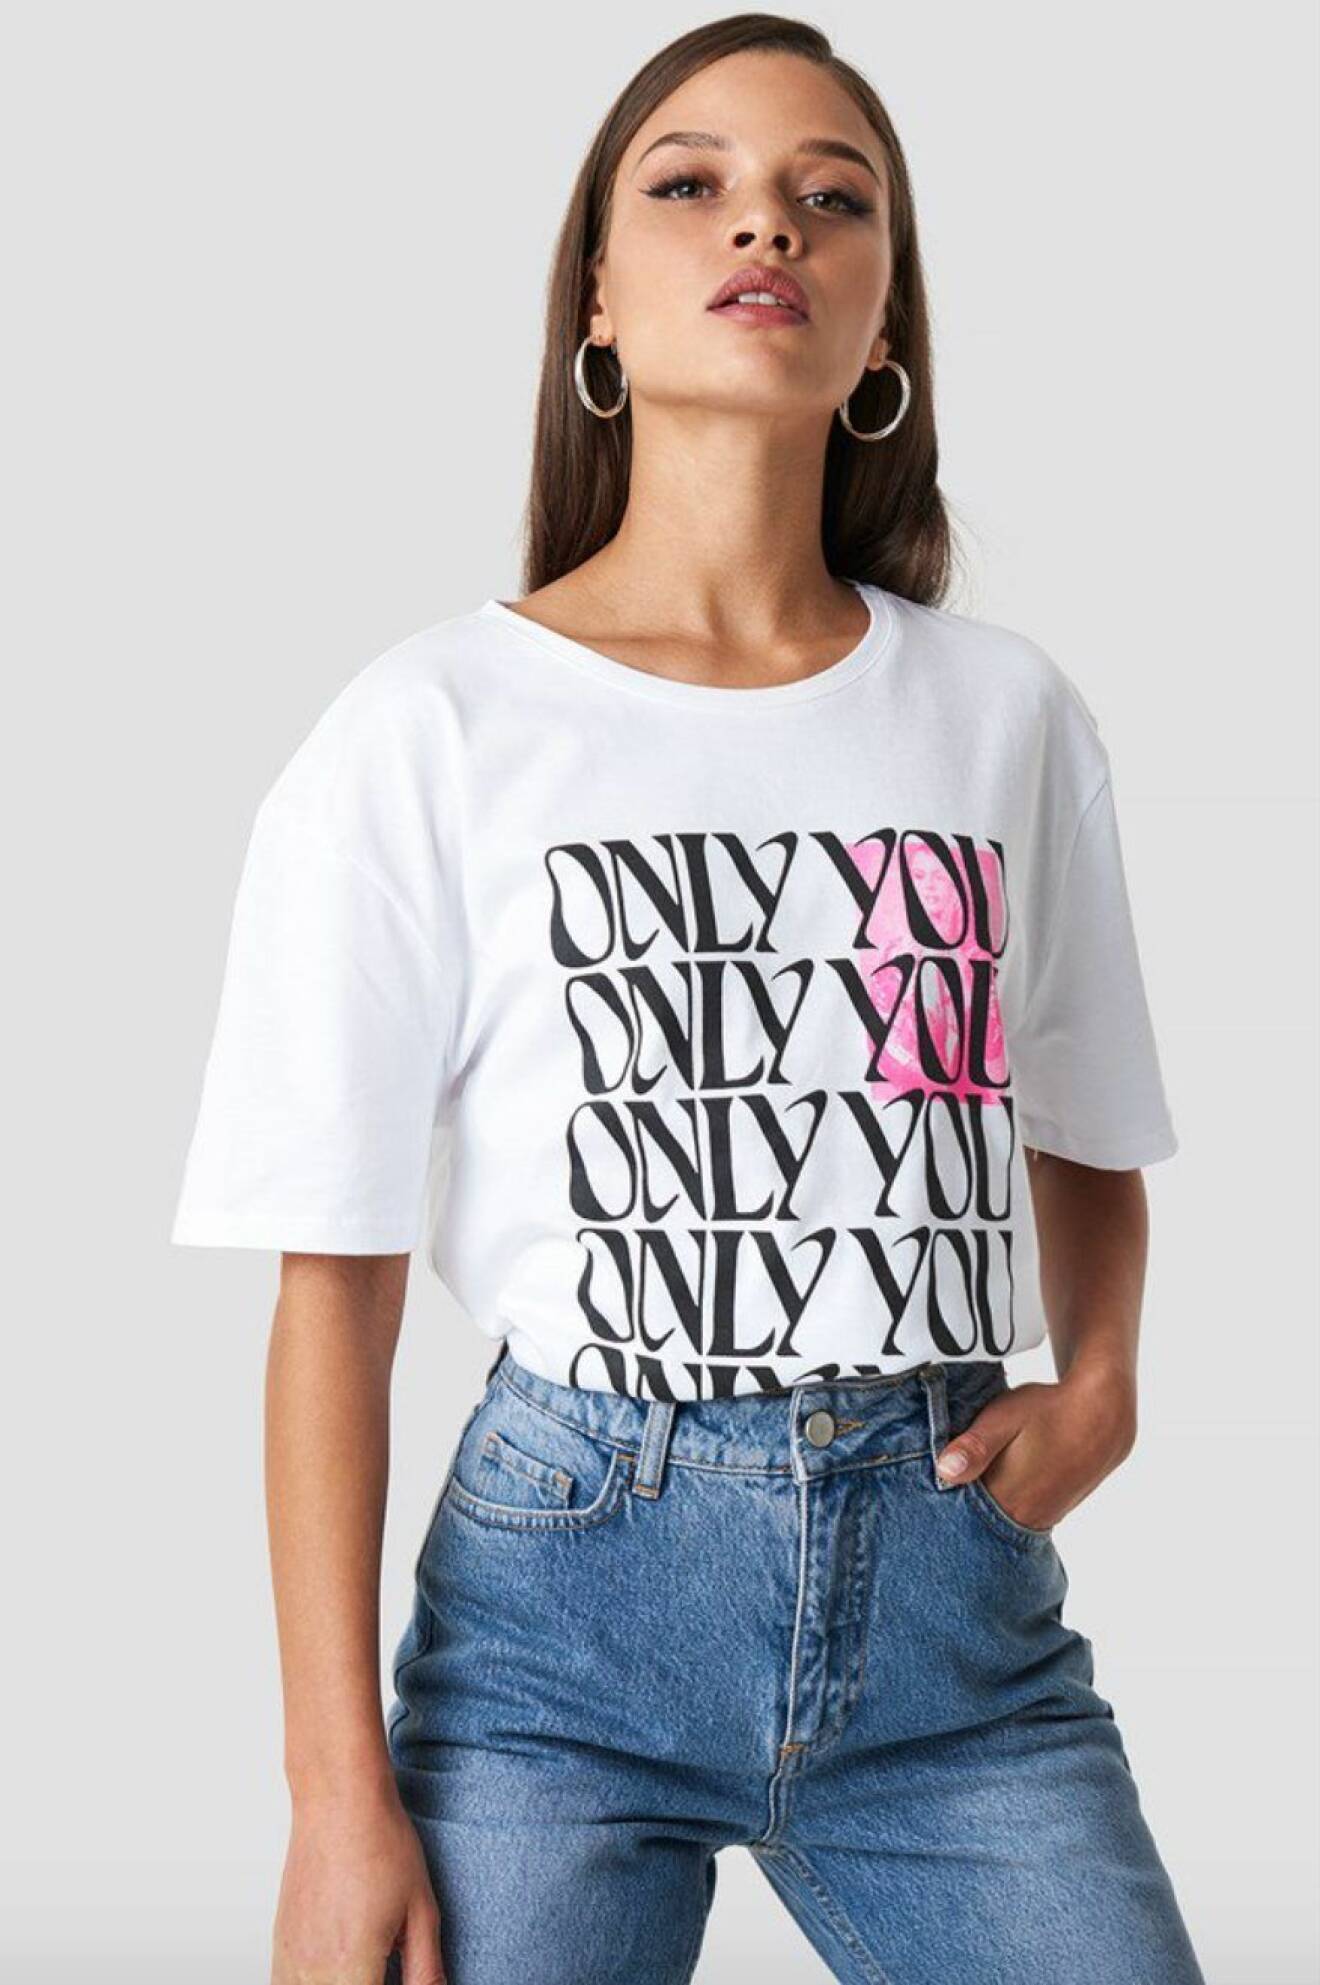 Only you t-shirt Zara Larsson